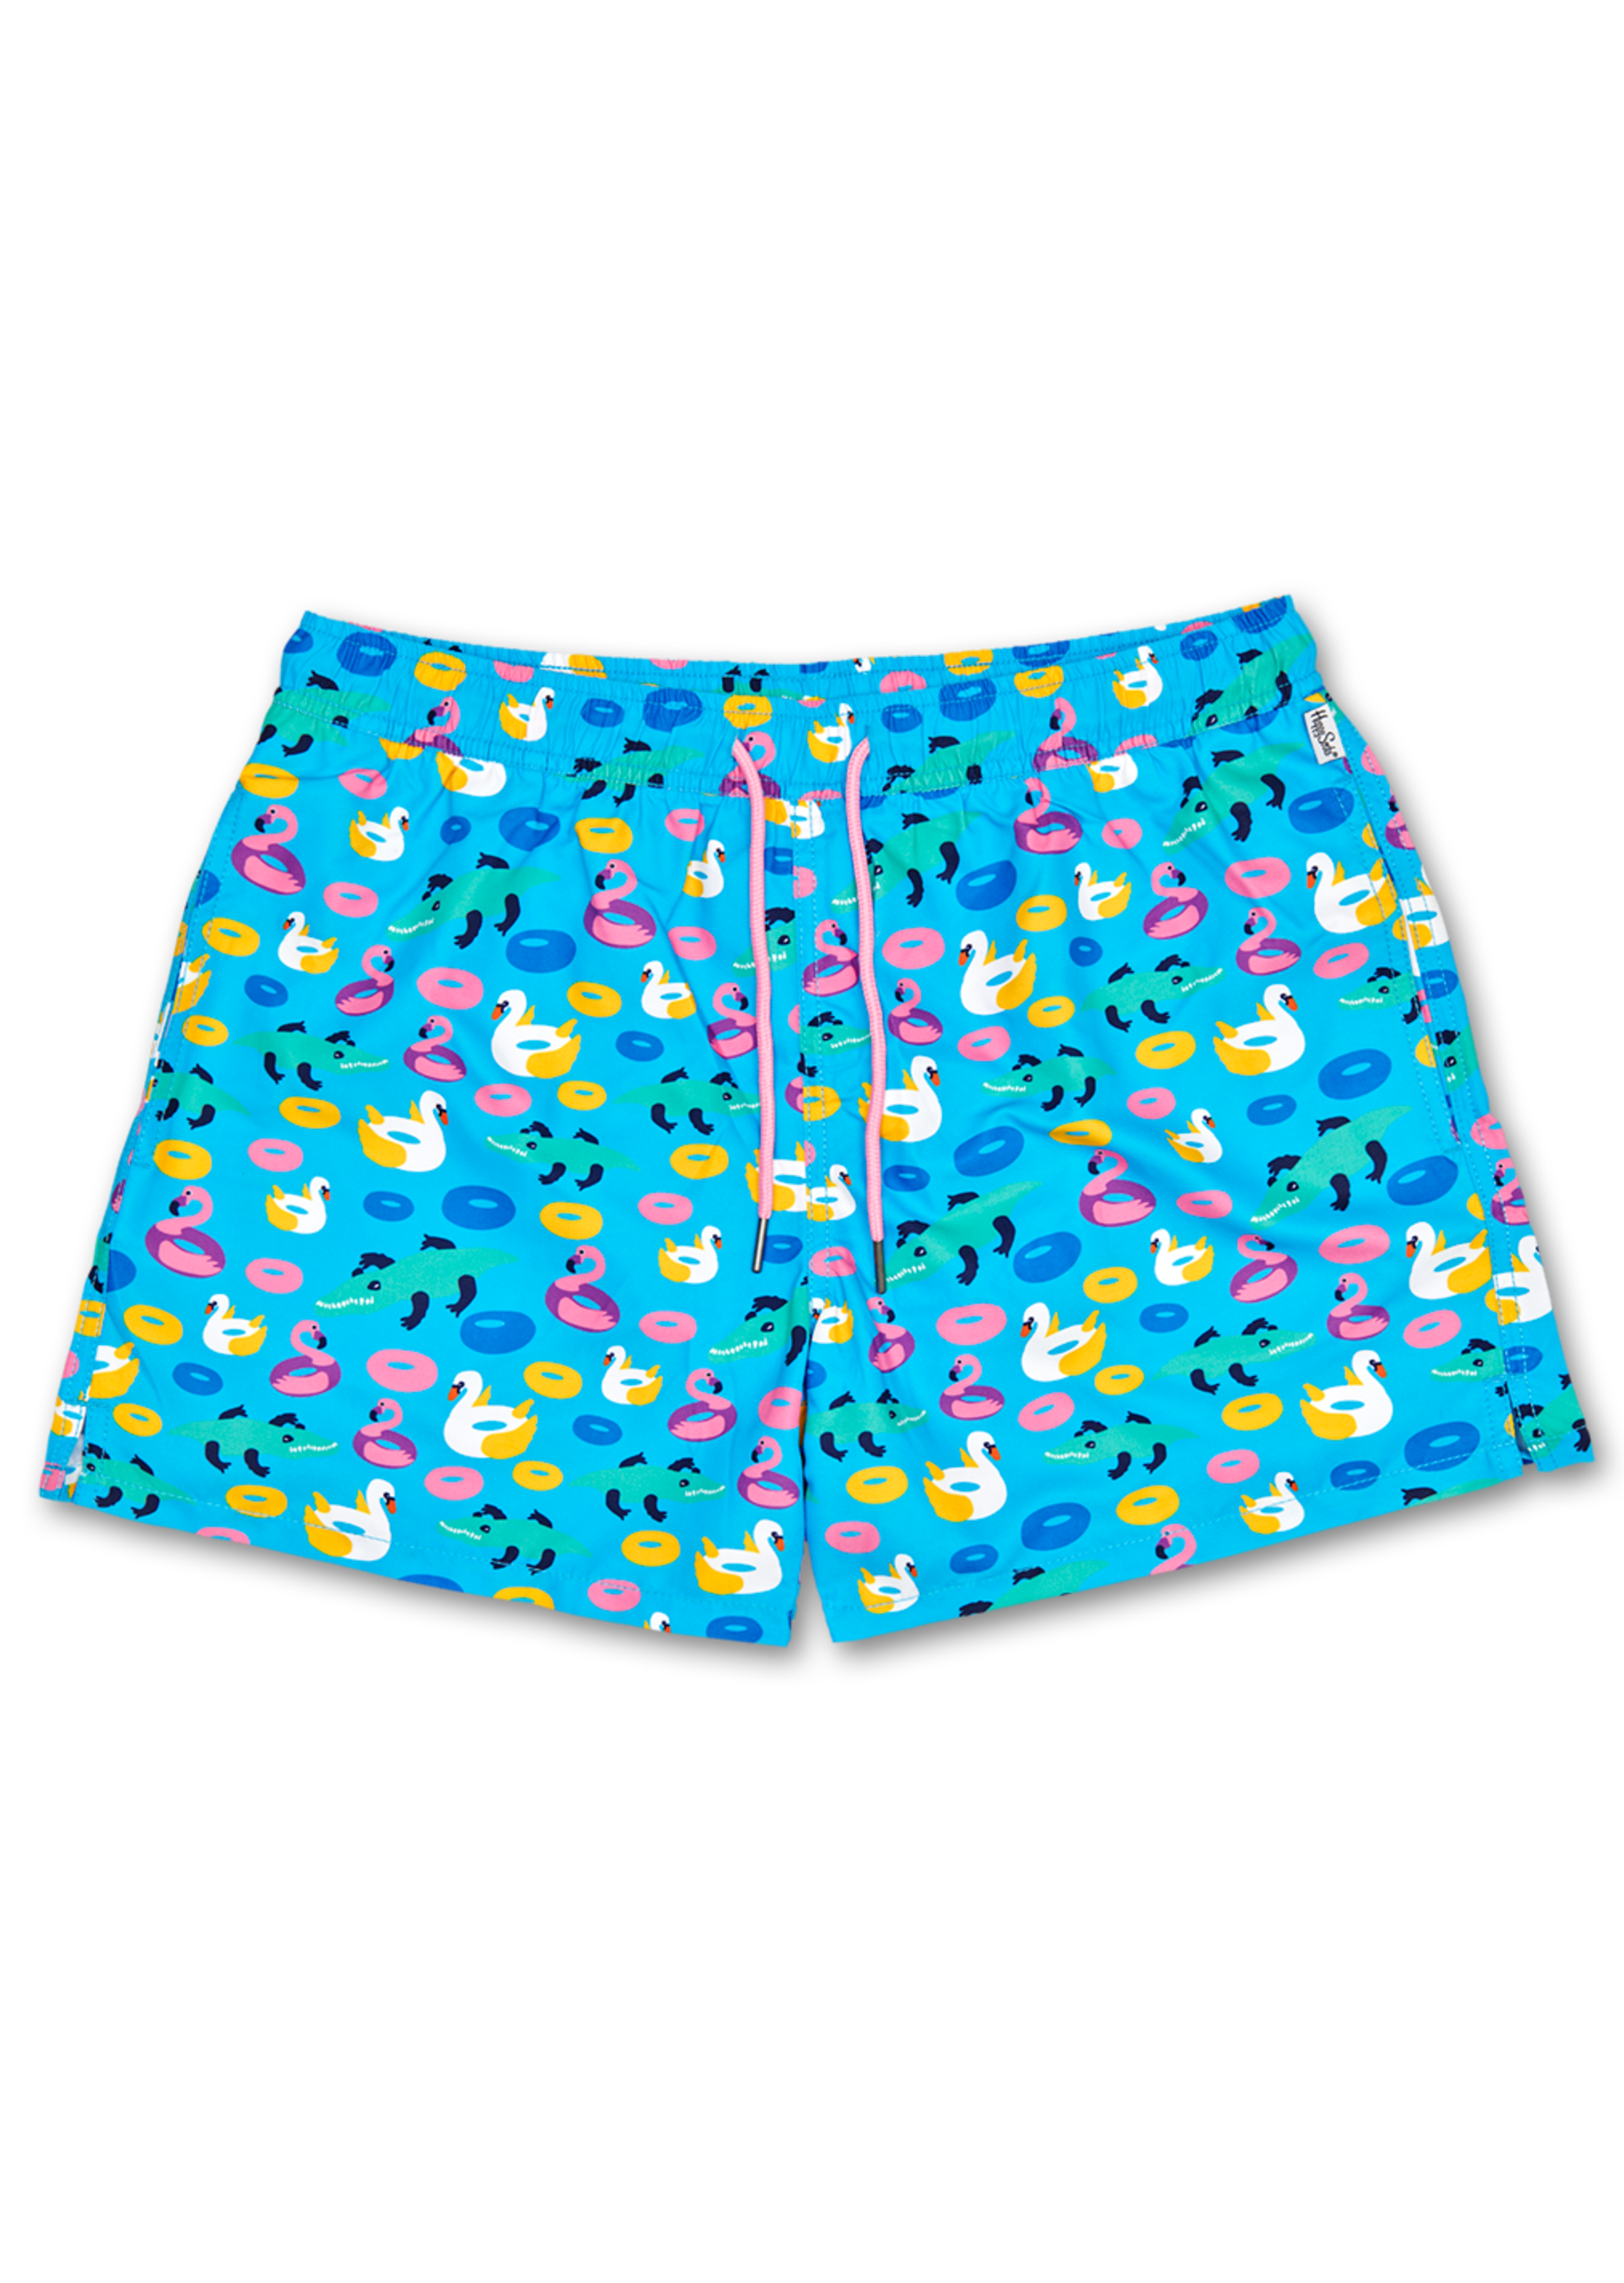 Men’s swim shorts: Pool Party pattern | Happy Socks